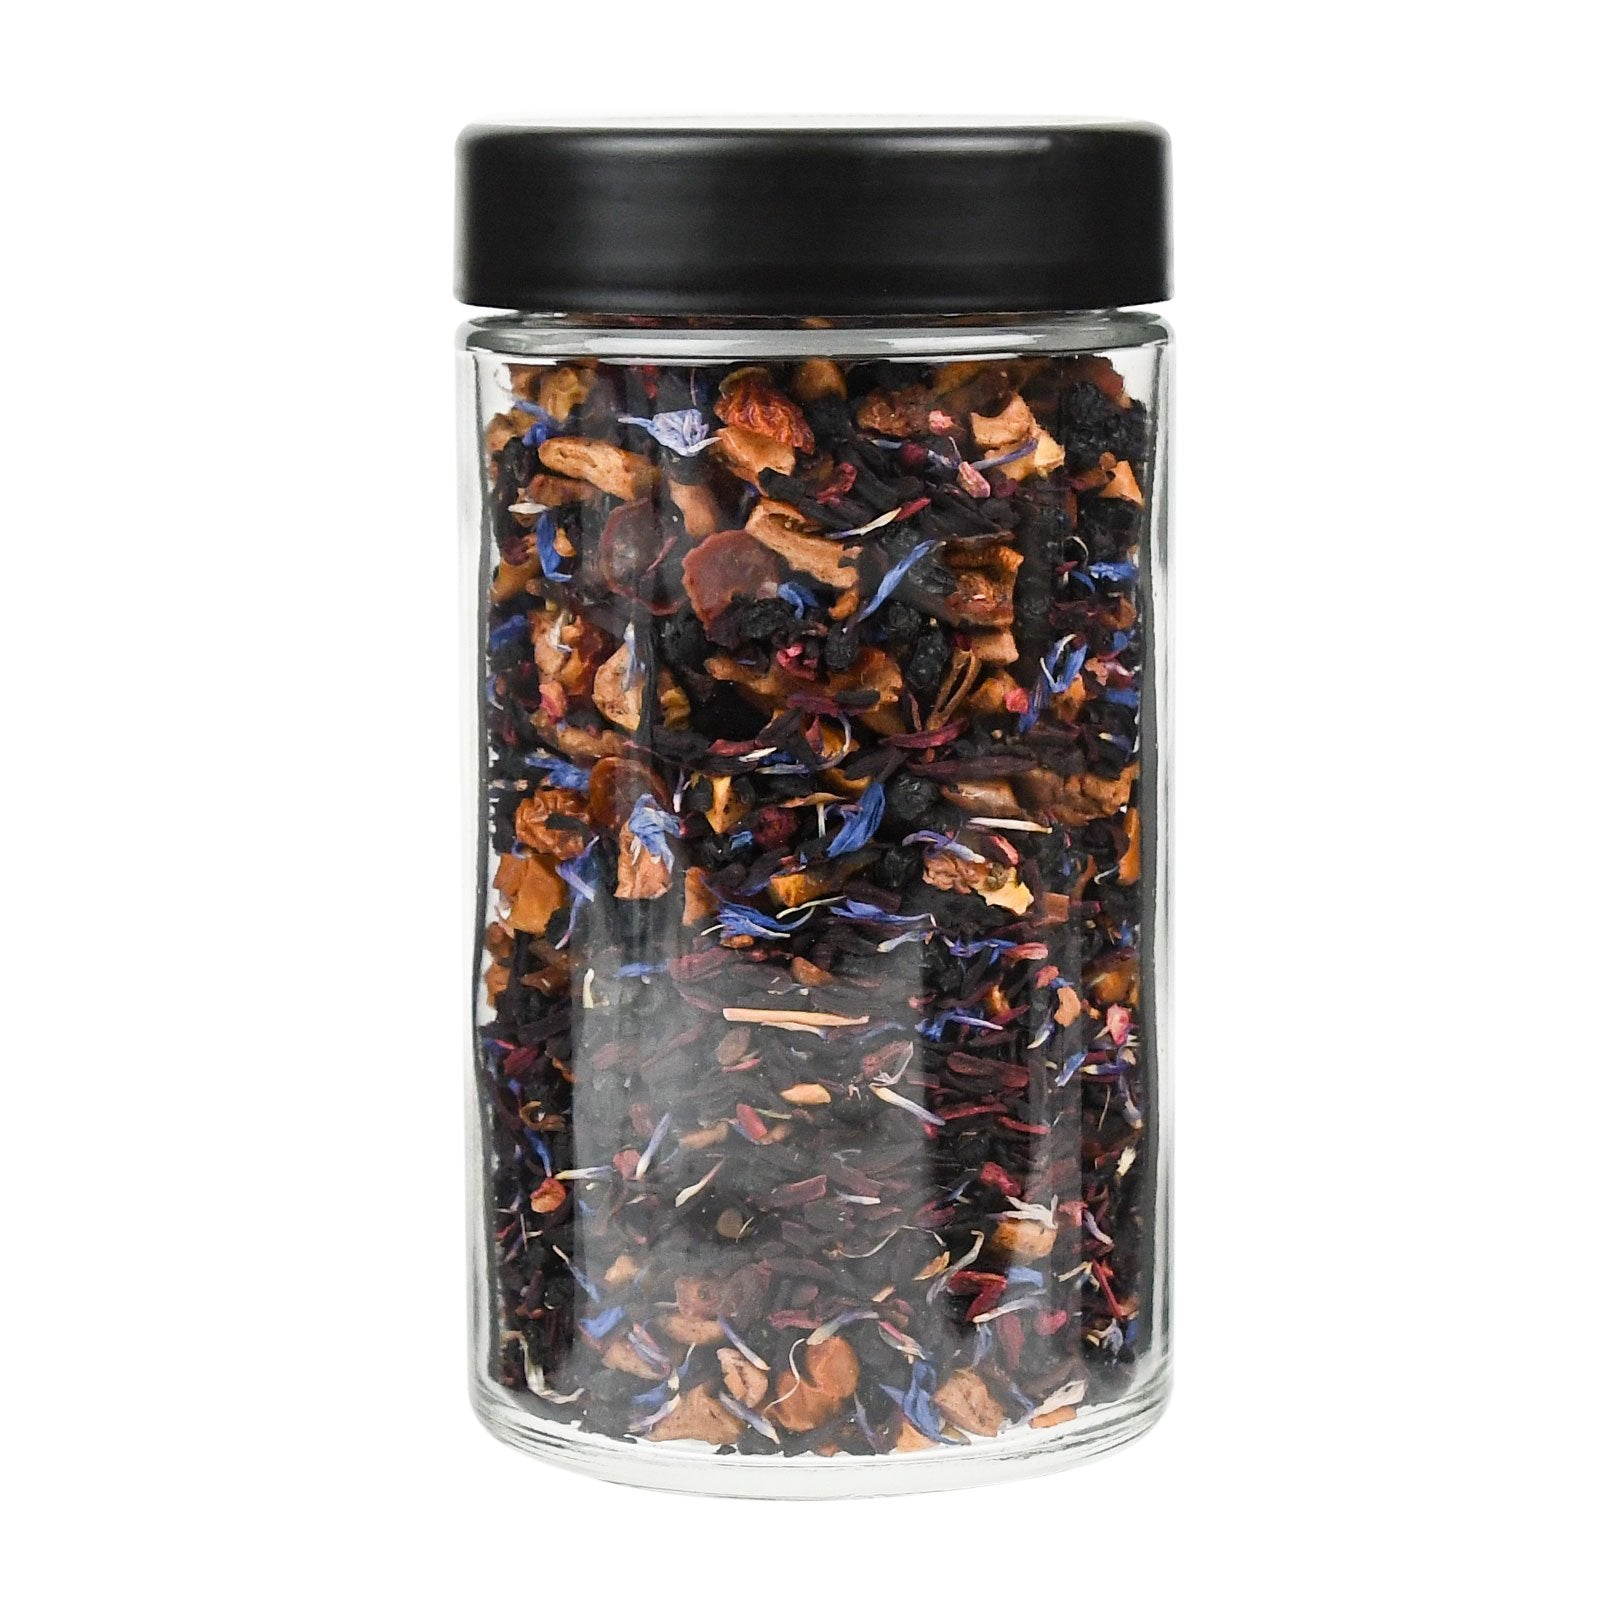 10oz Child Resistant Glass Jars With Black Caps - 14 Grams - 72 Count